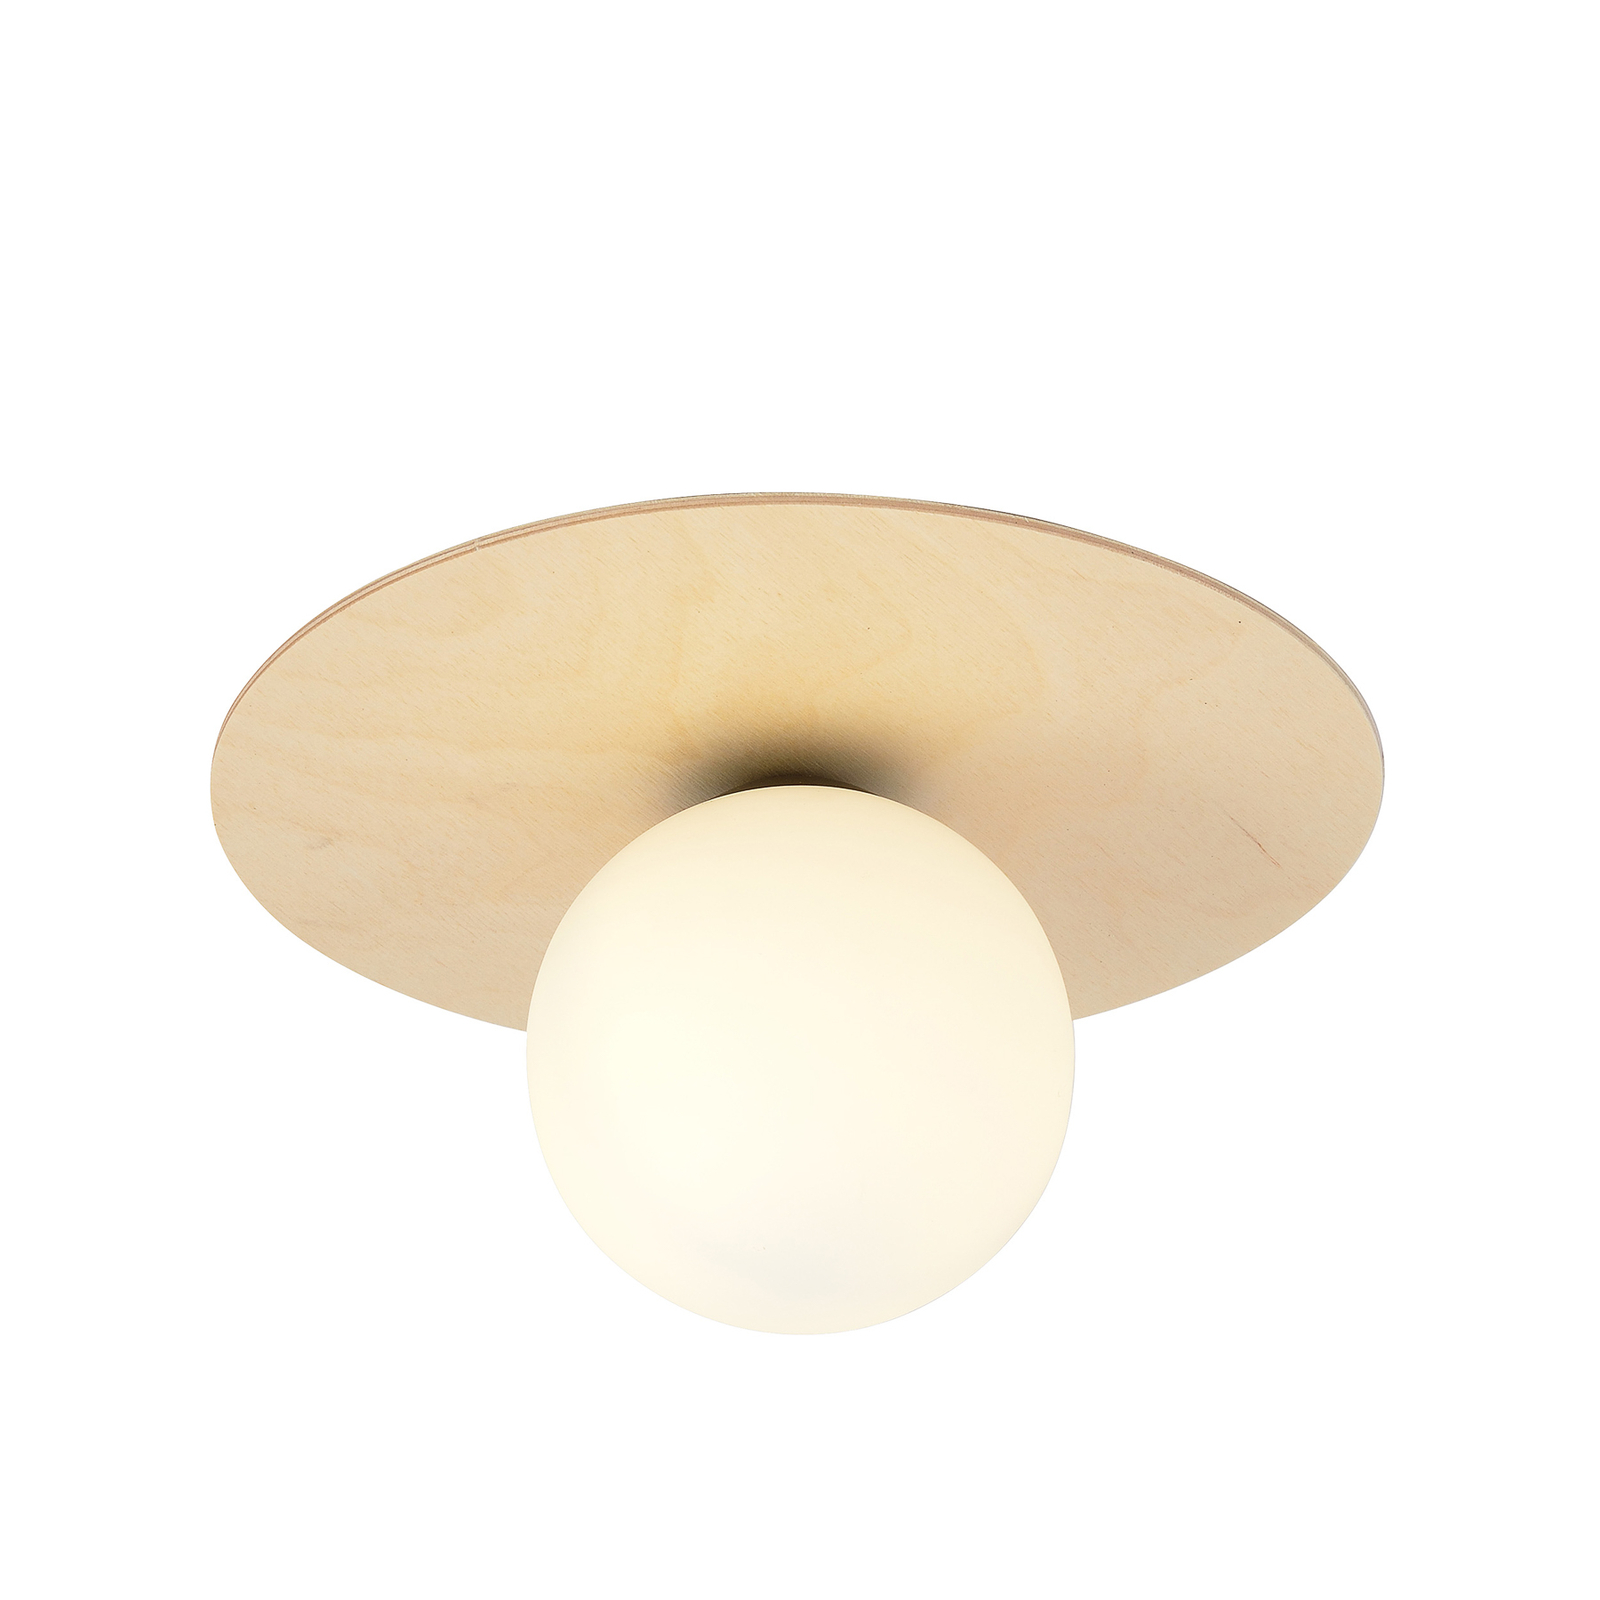 Kenzo ceiling light, round, brown/white, 1-bulb